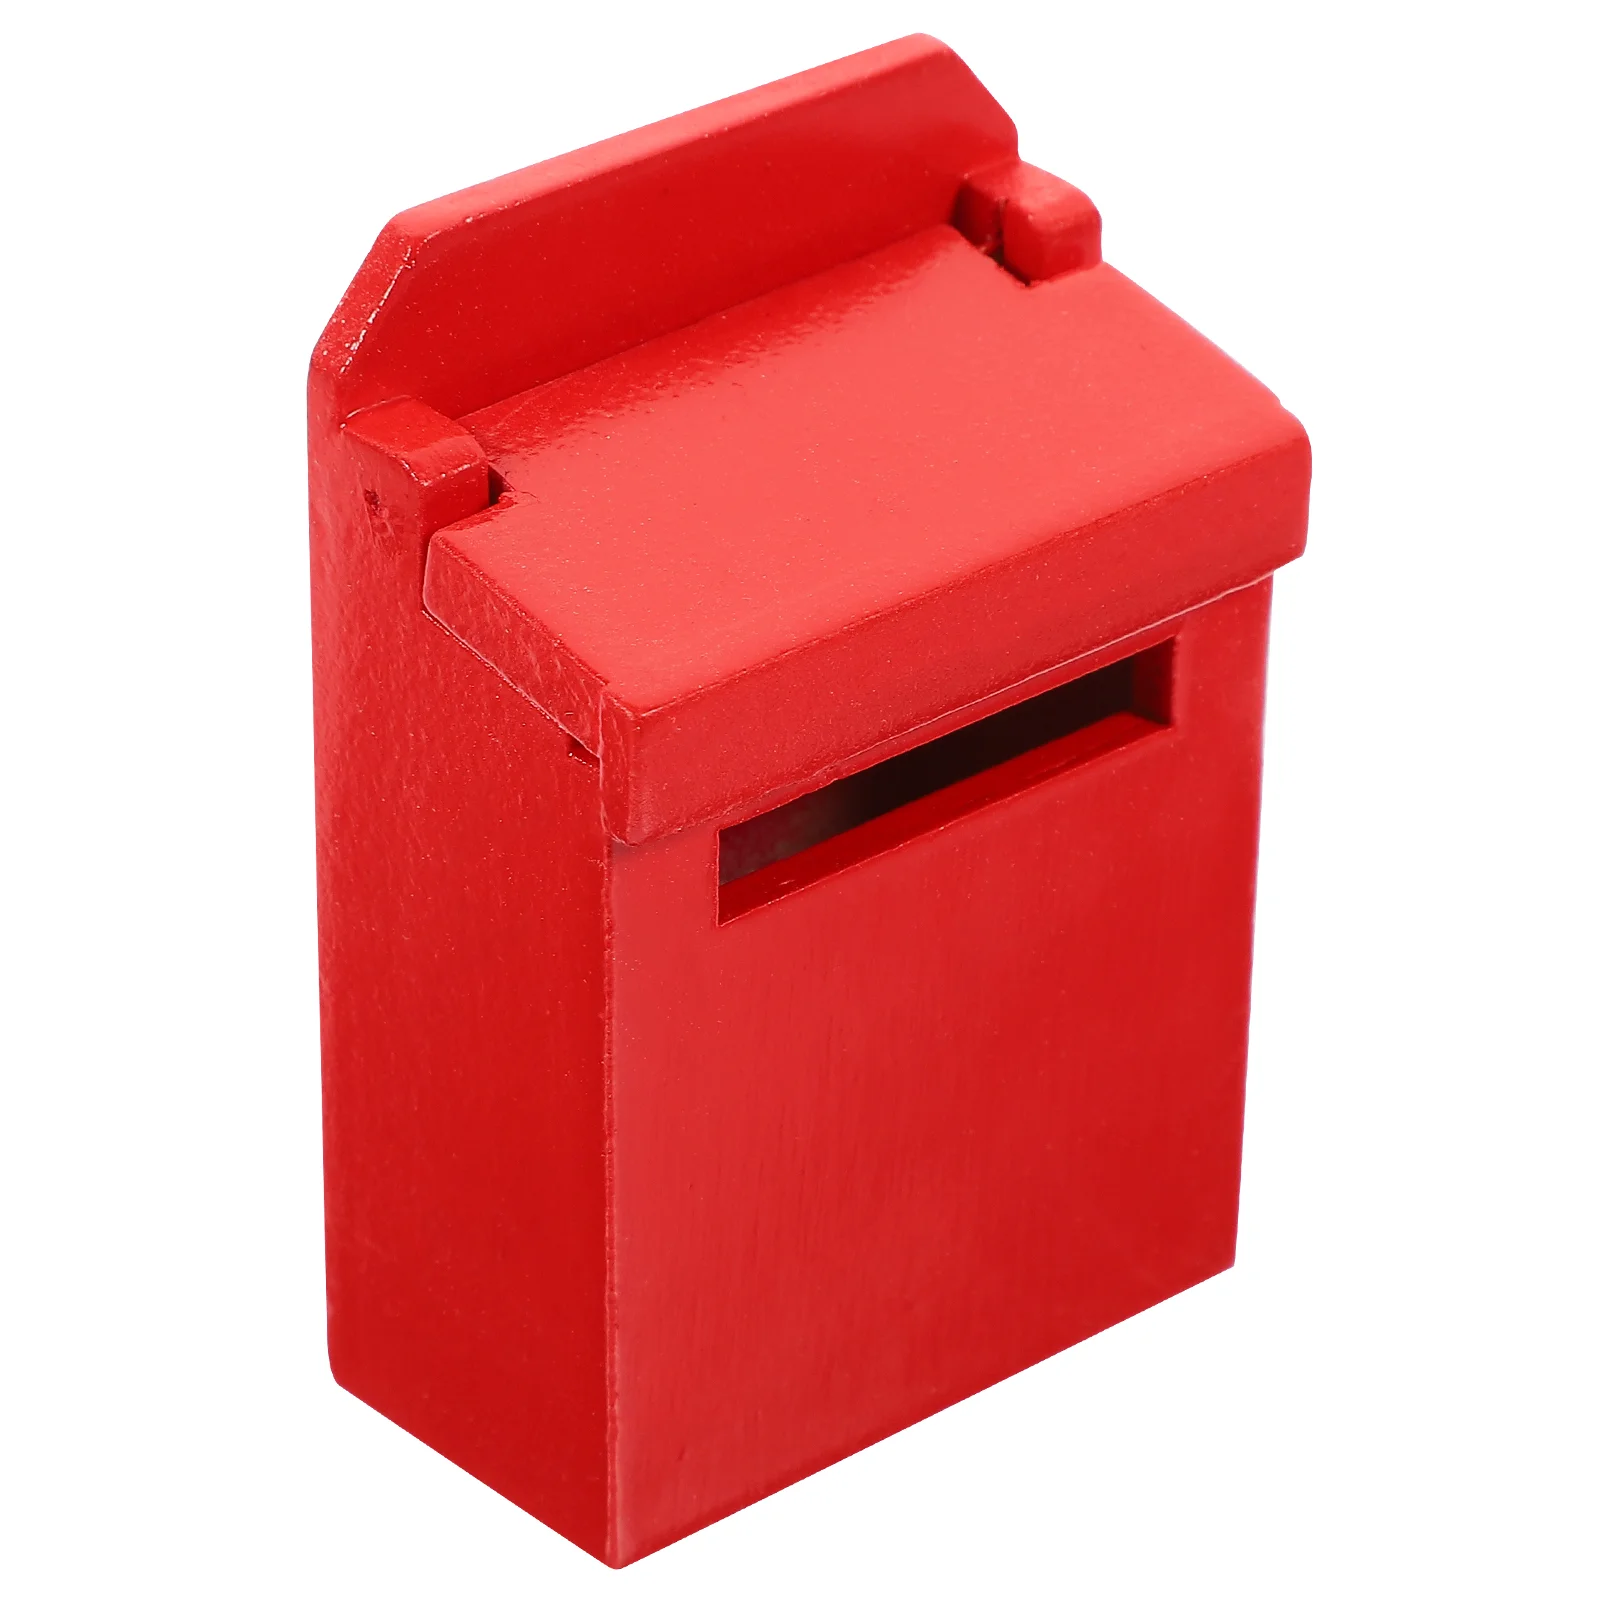 

Mini Mailbox Model Miniature Mailbox Figurine Tiny Wooden Mailbox Mini House Mailbox Decor